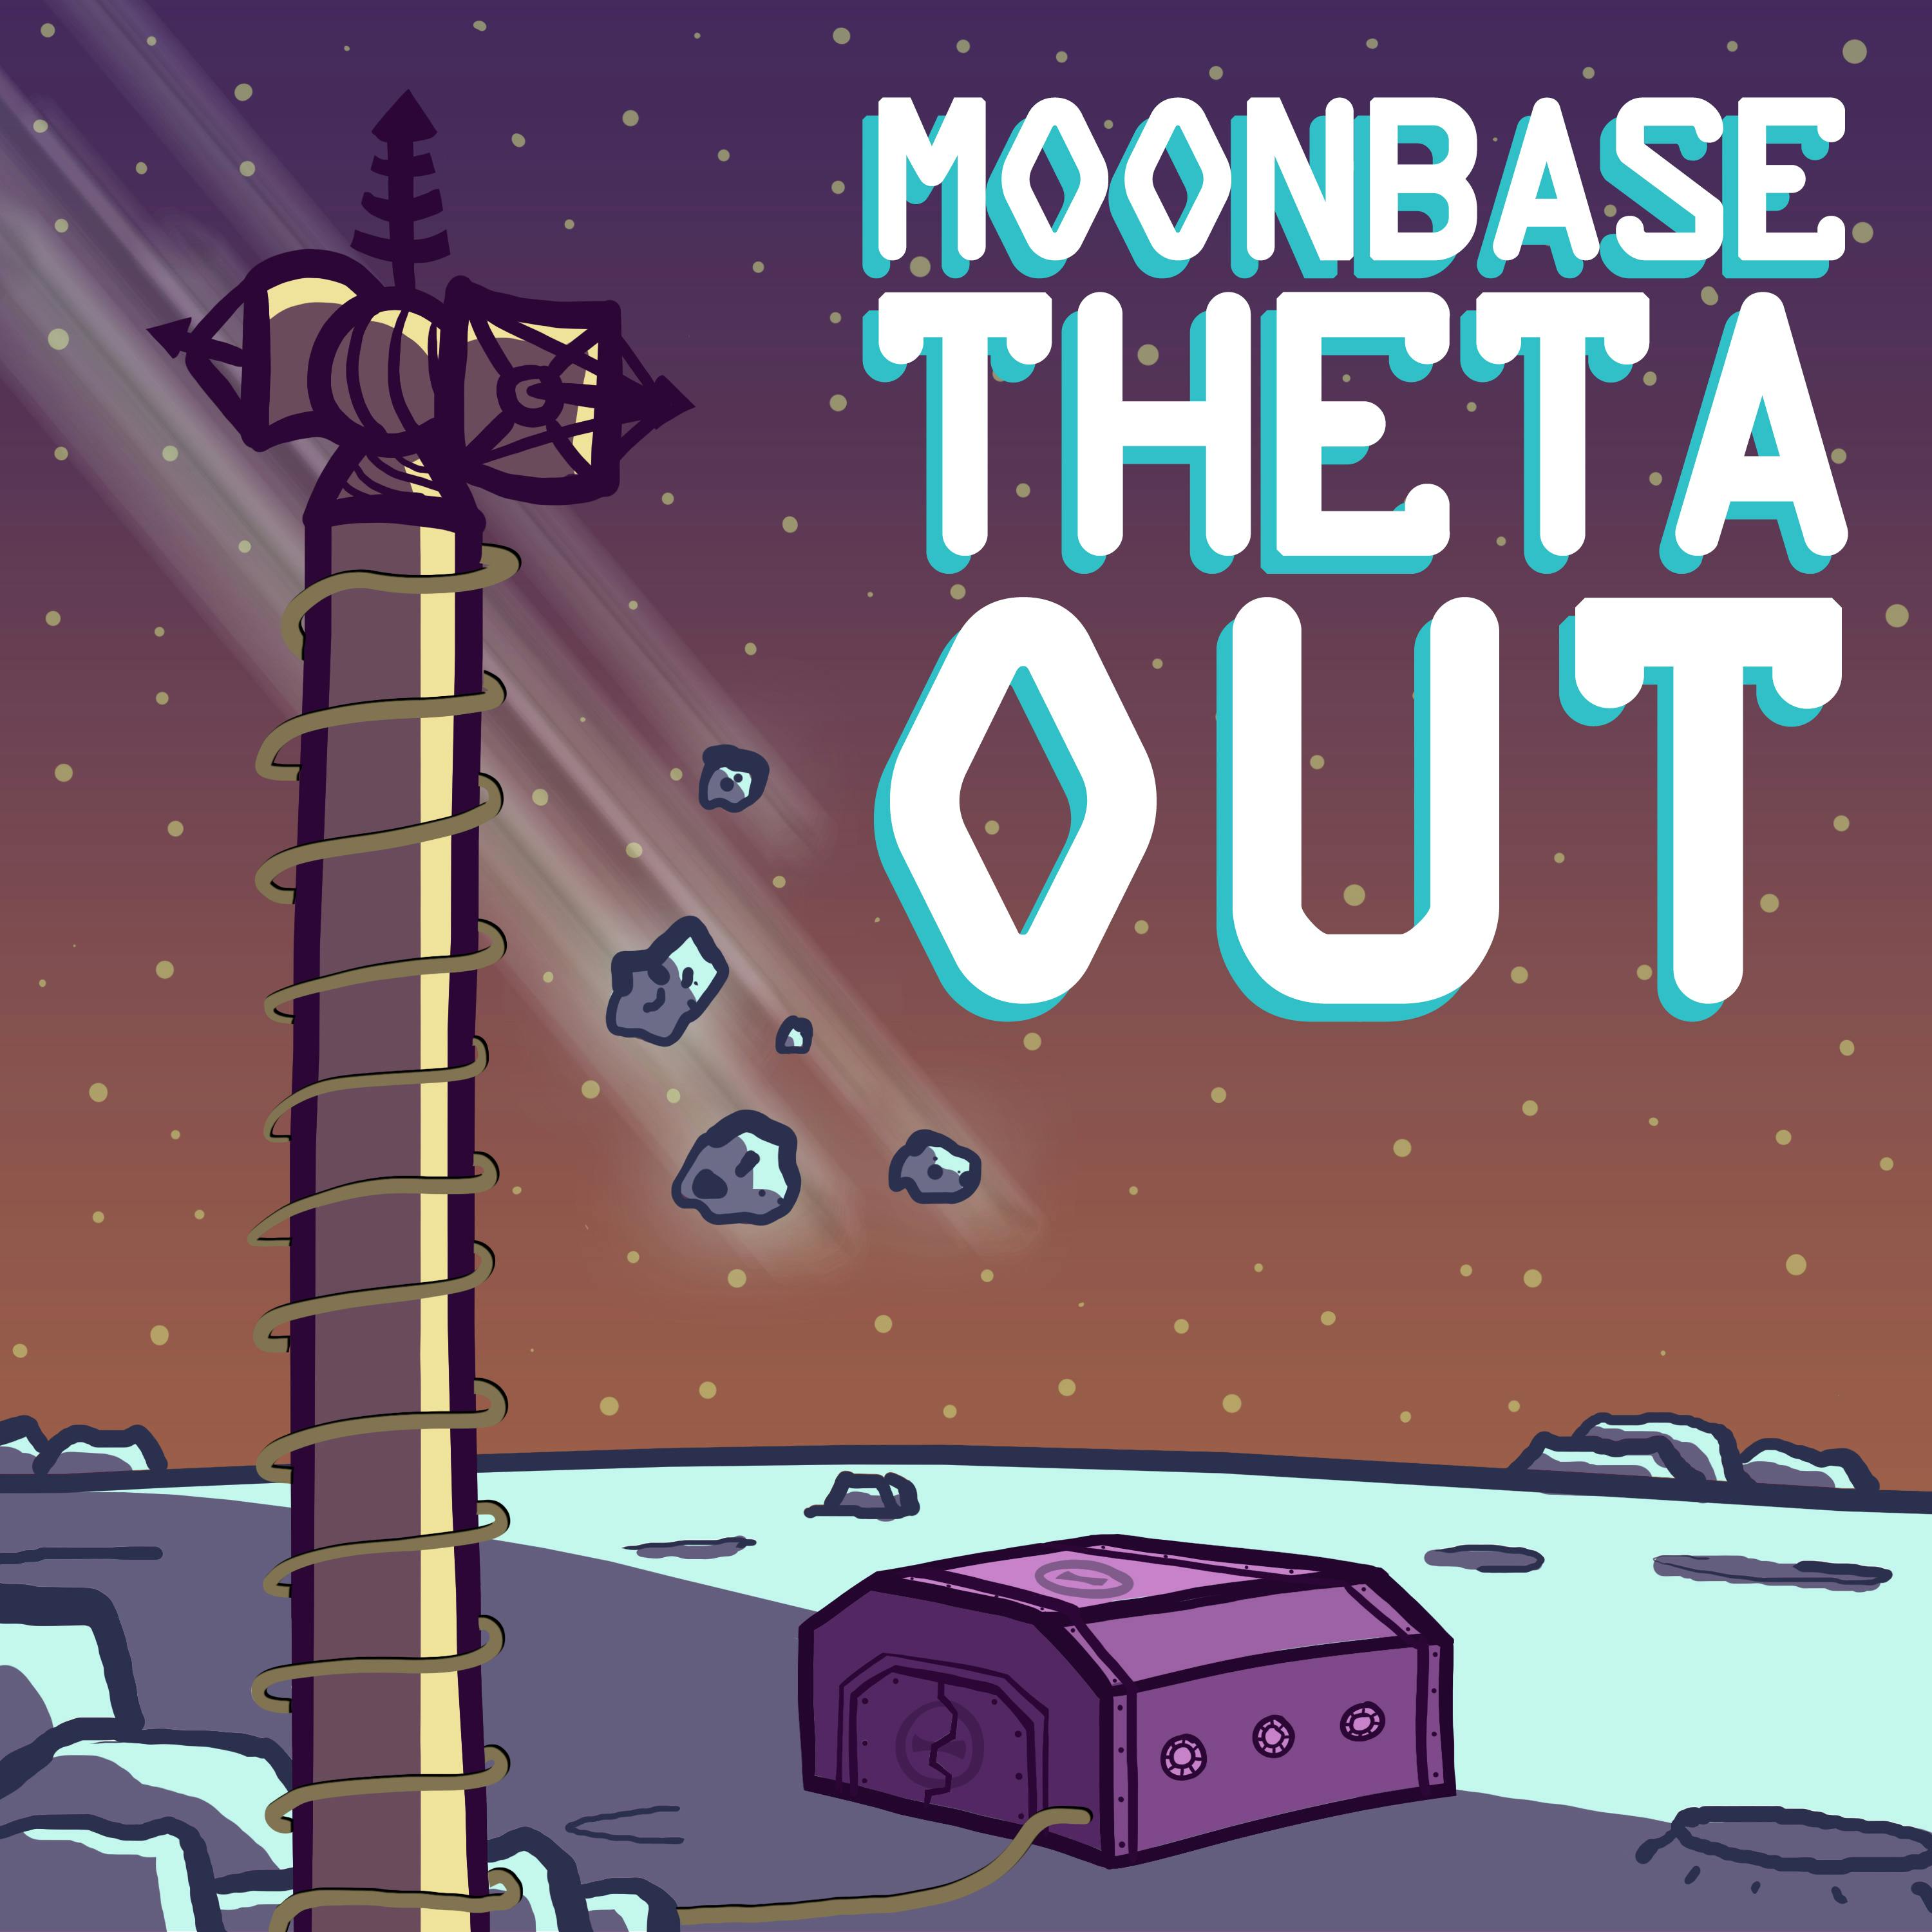 Podfriends: Moonbase Theta, Out